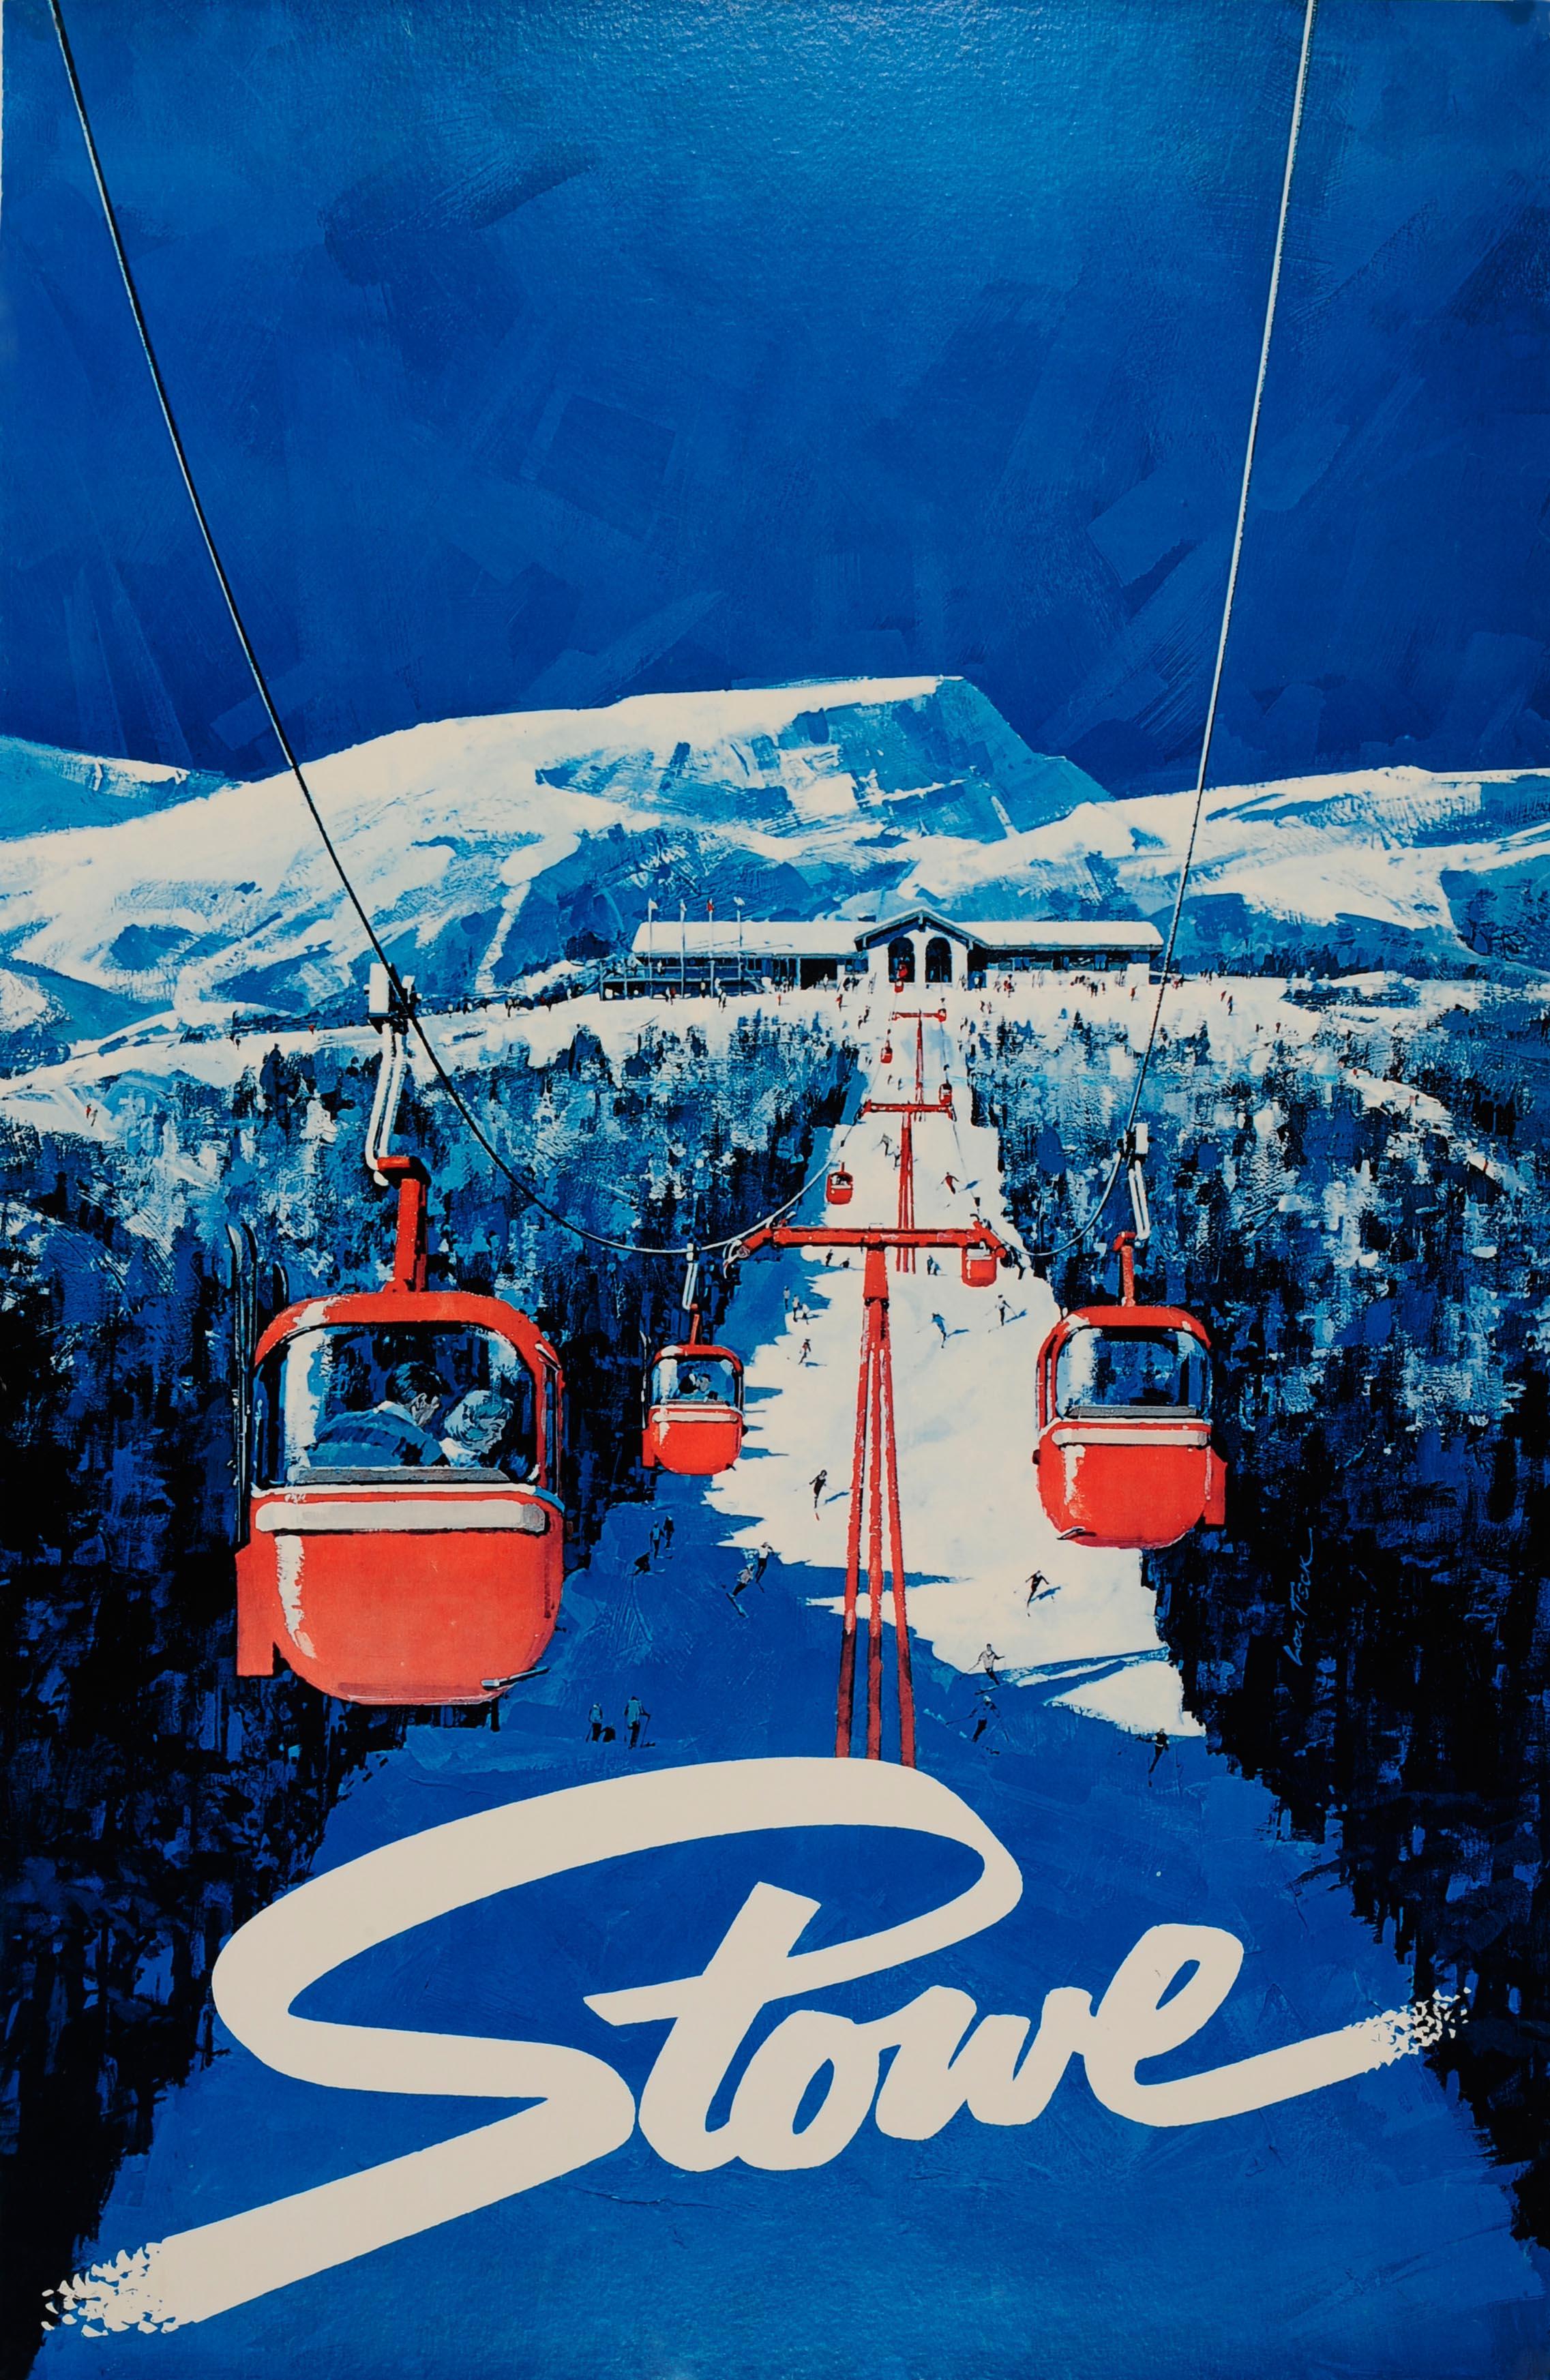 Unknown Print - Original Vintage Skiing Poster Stowe Alpine Ski Resort Vermont Cable Car Ski Run